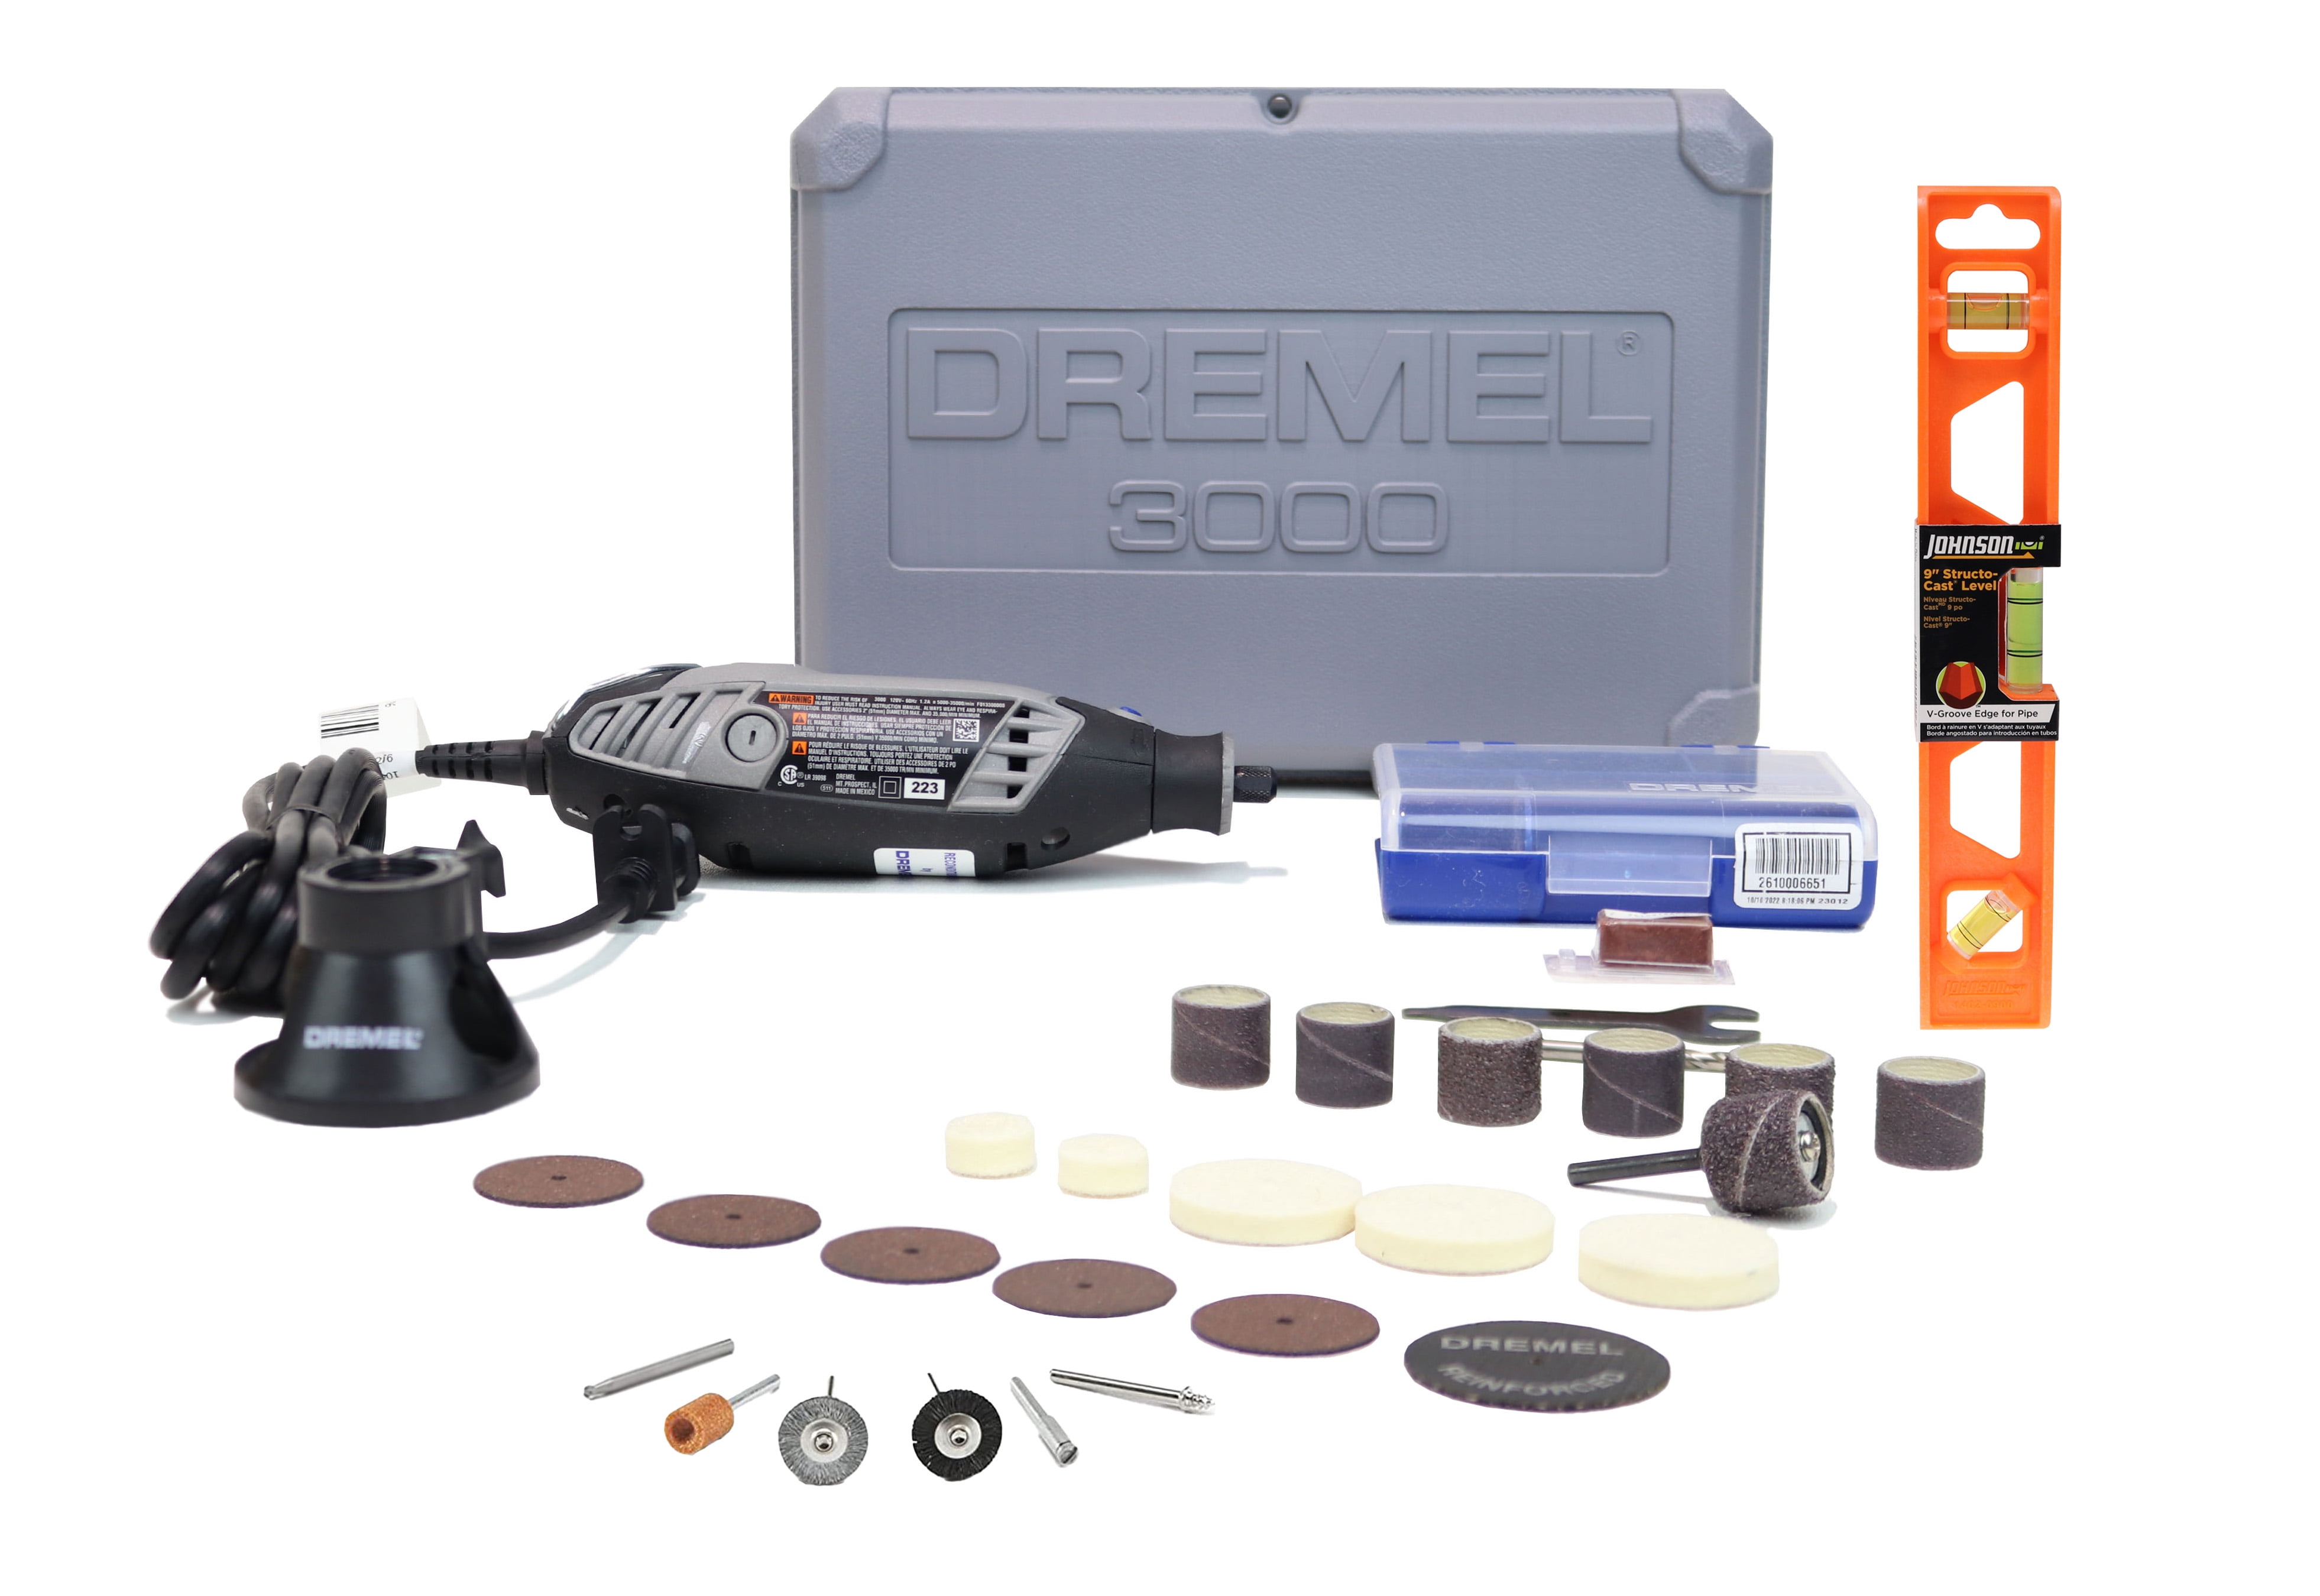 MultiPro 395:80 Professional Dremel Grinder Tool Kit with